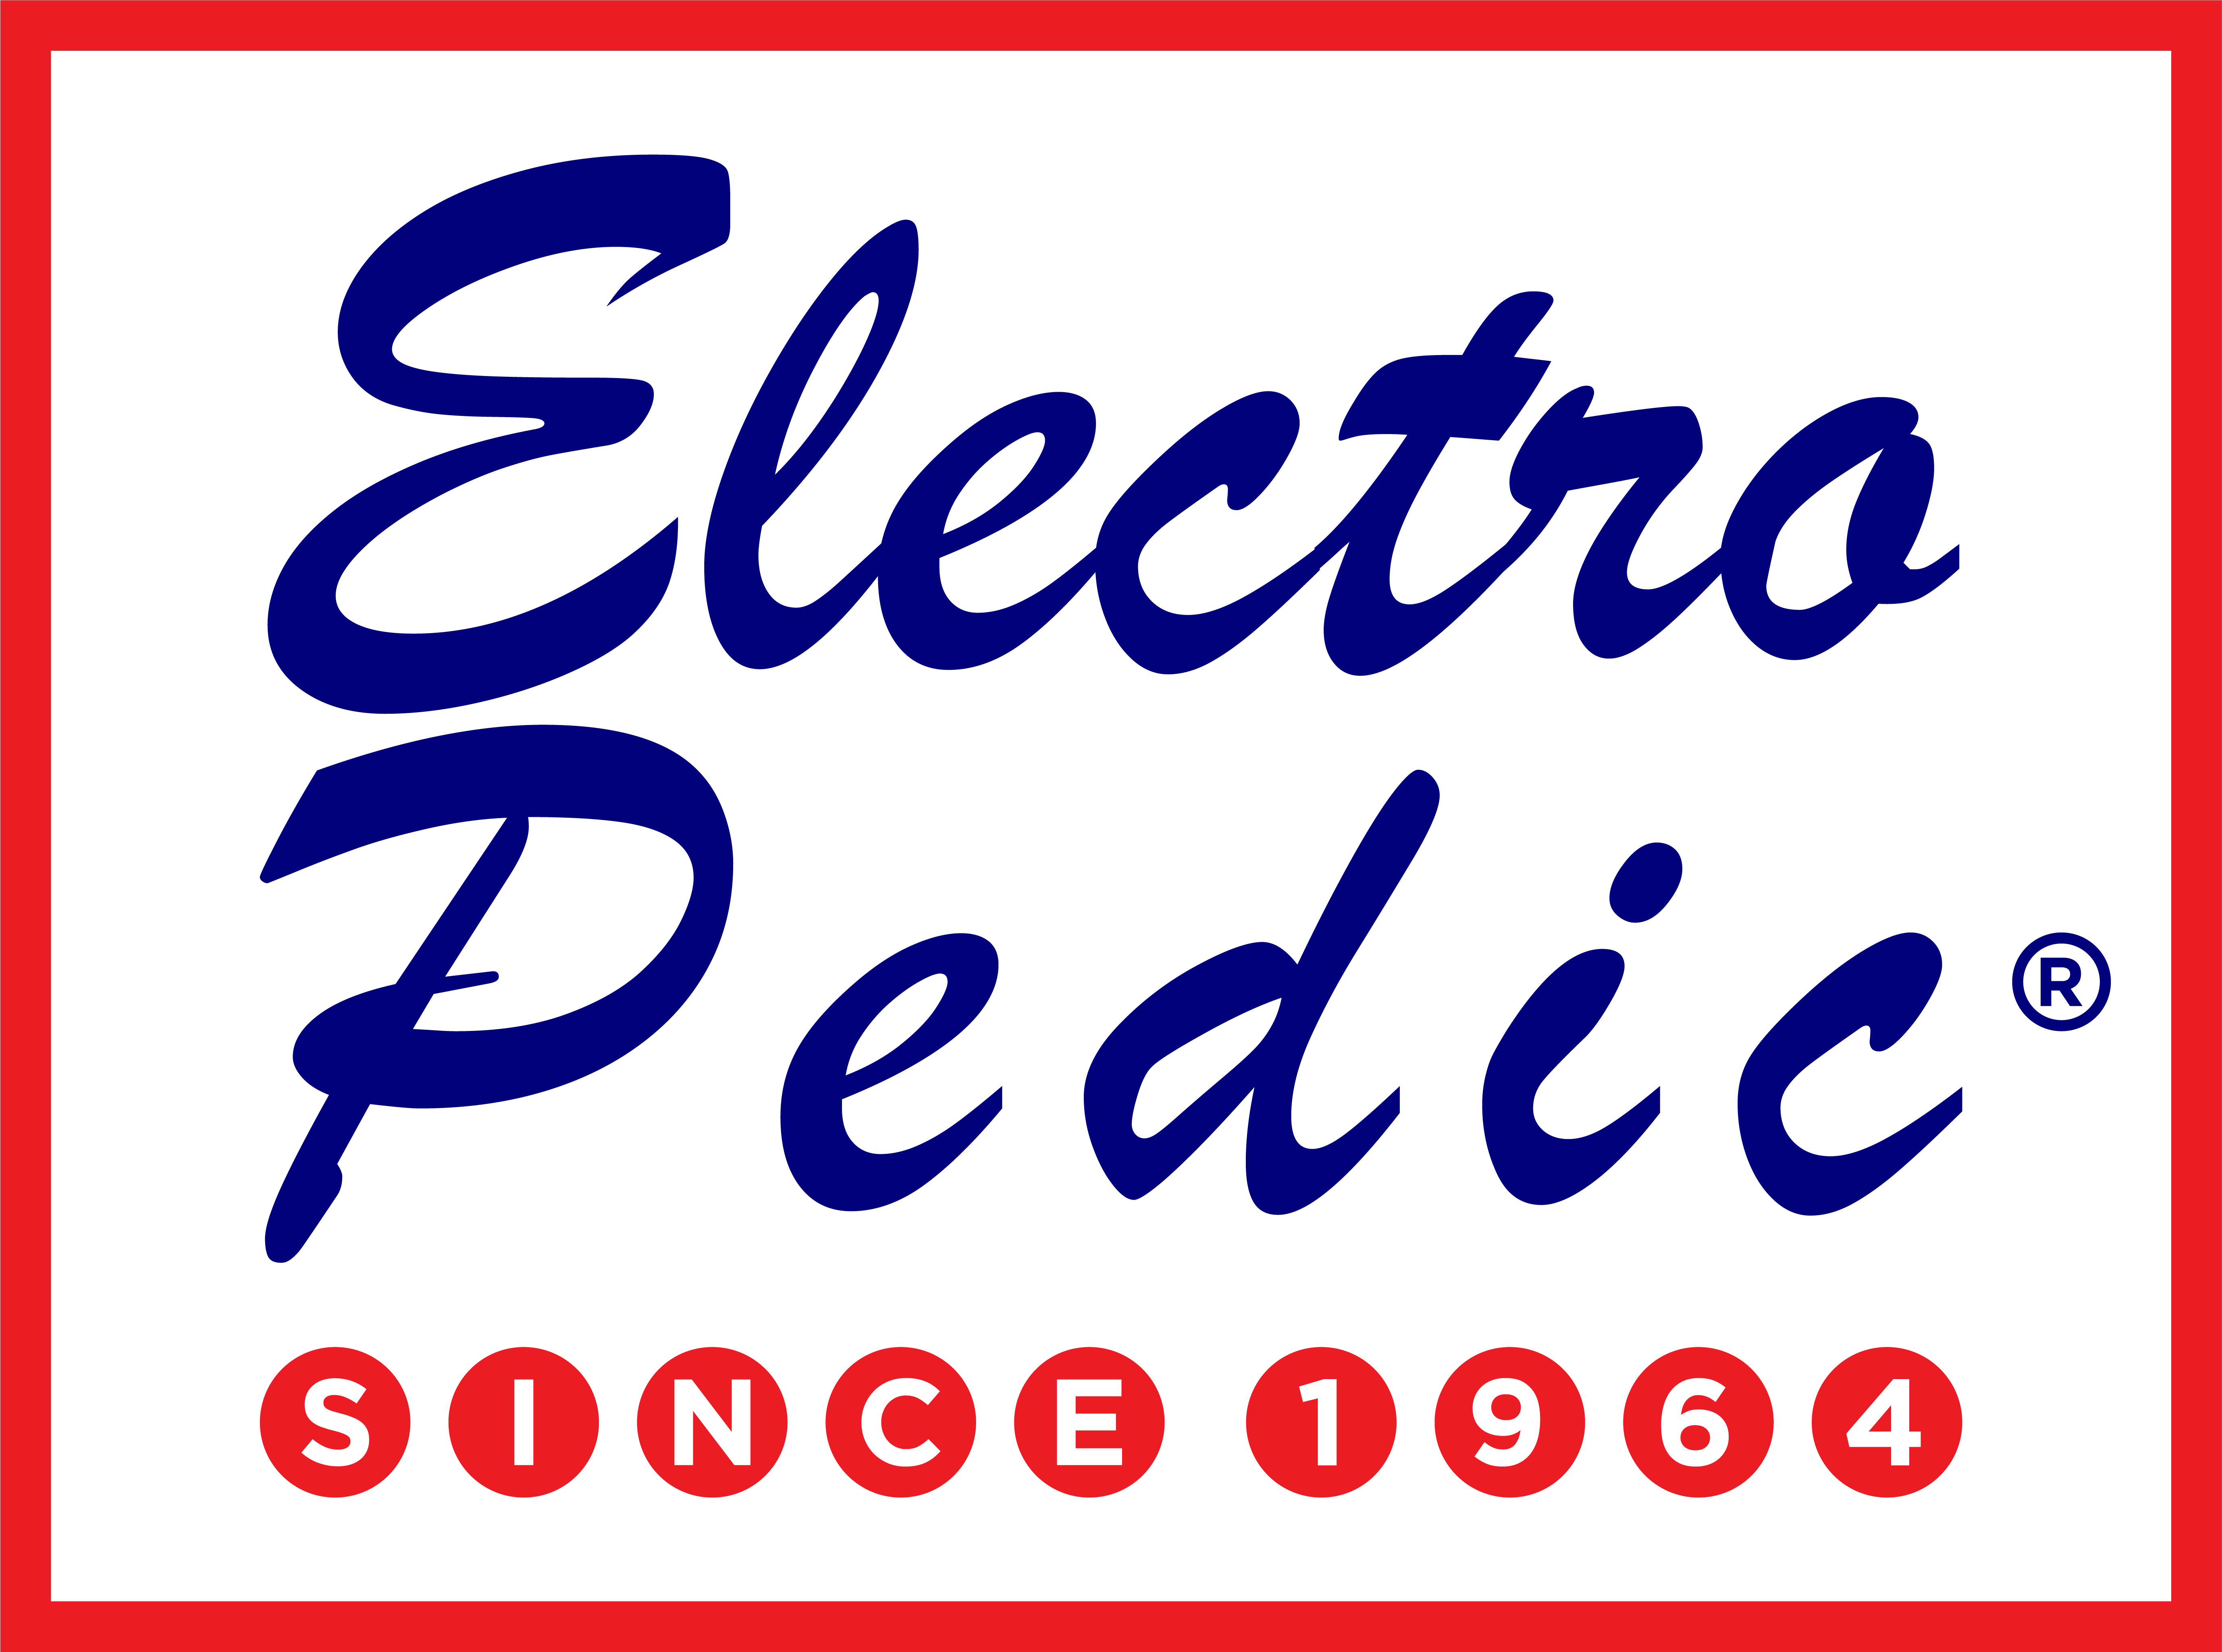 Electropedic.com